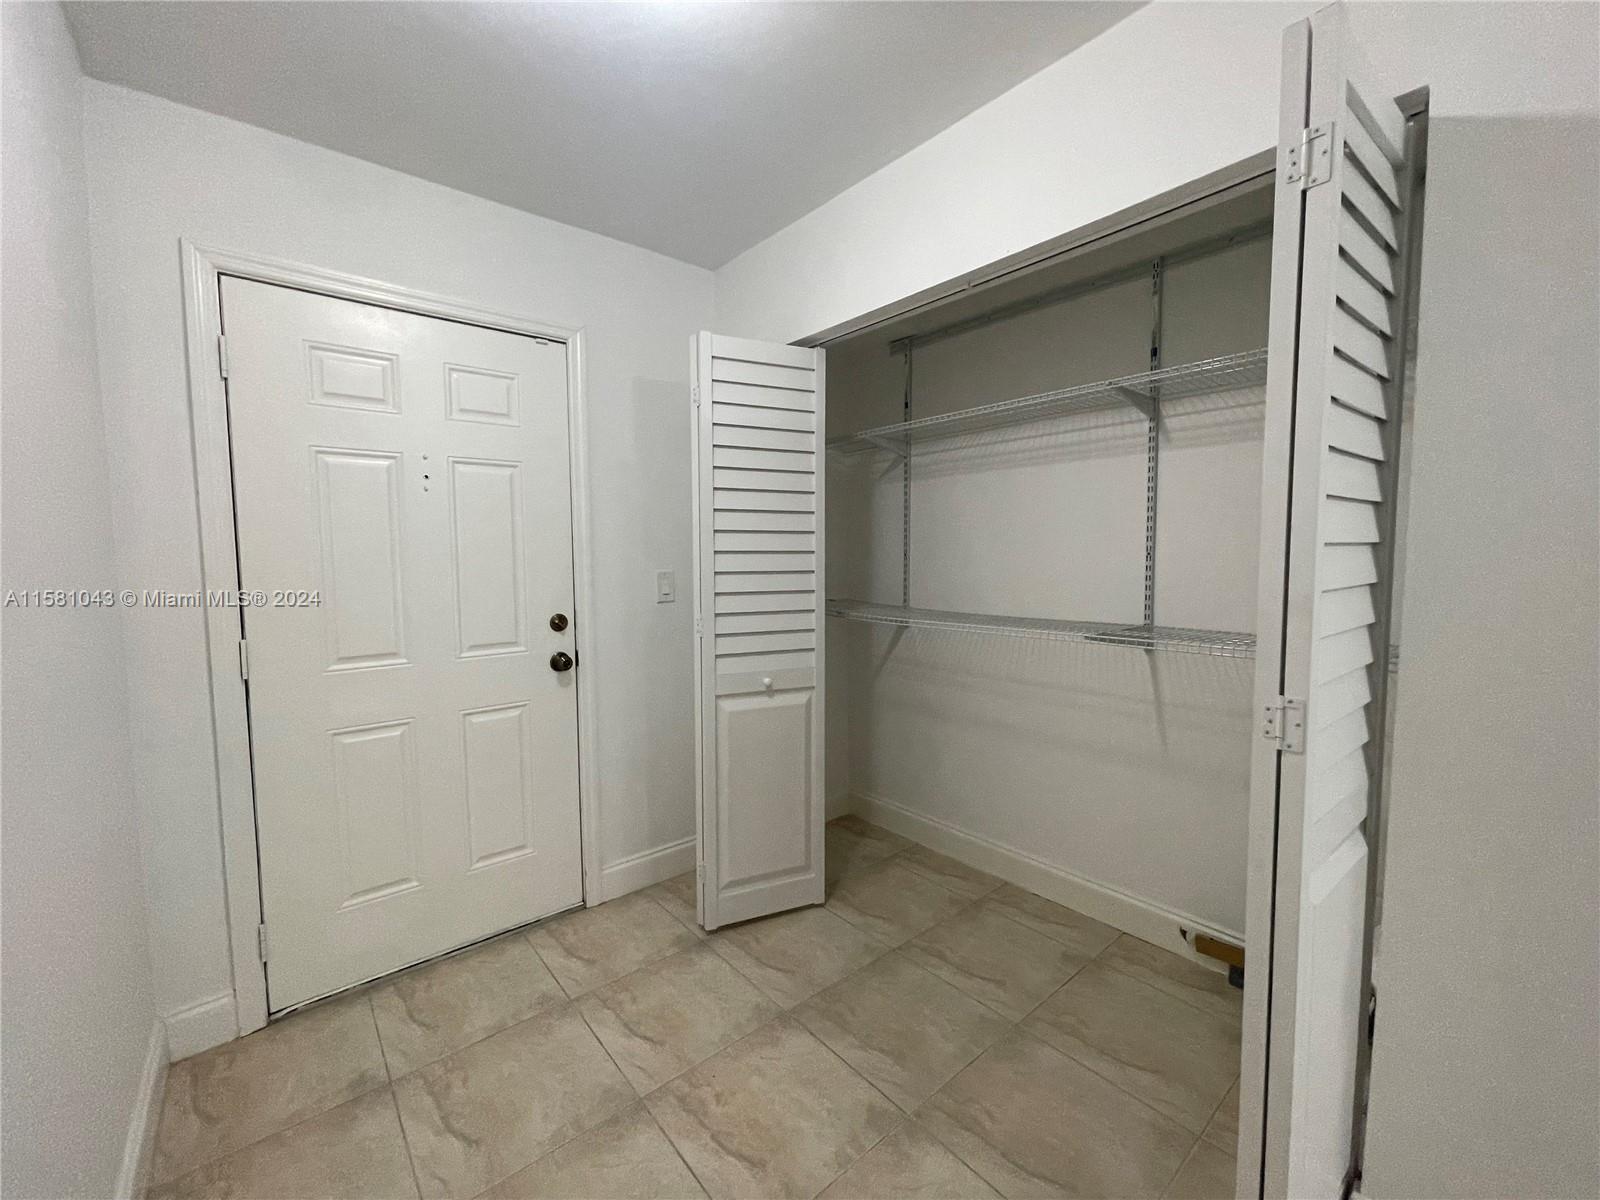 Rental Property at 40 Nw 87th Ave D110, Miami, Broward County, Florida - Bedrooms: 1 
Bathrooms: 2  - $2,200 MO.